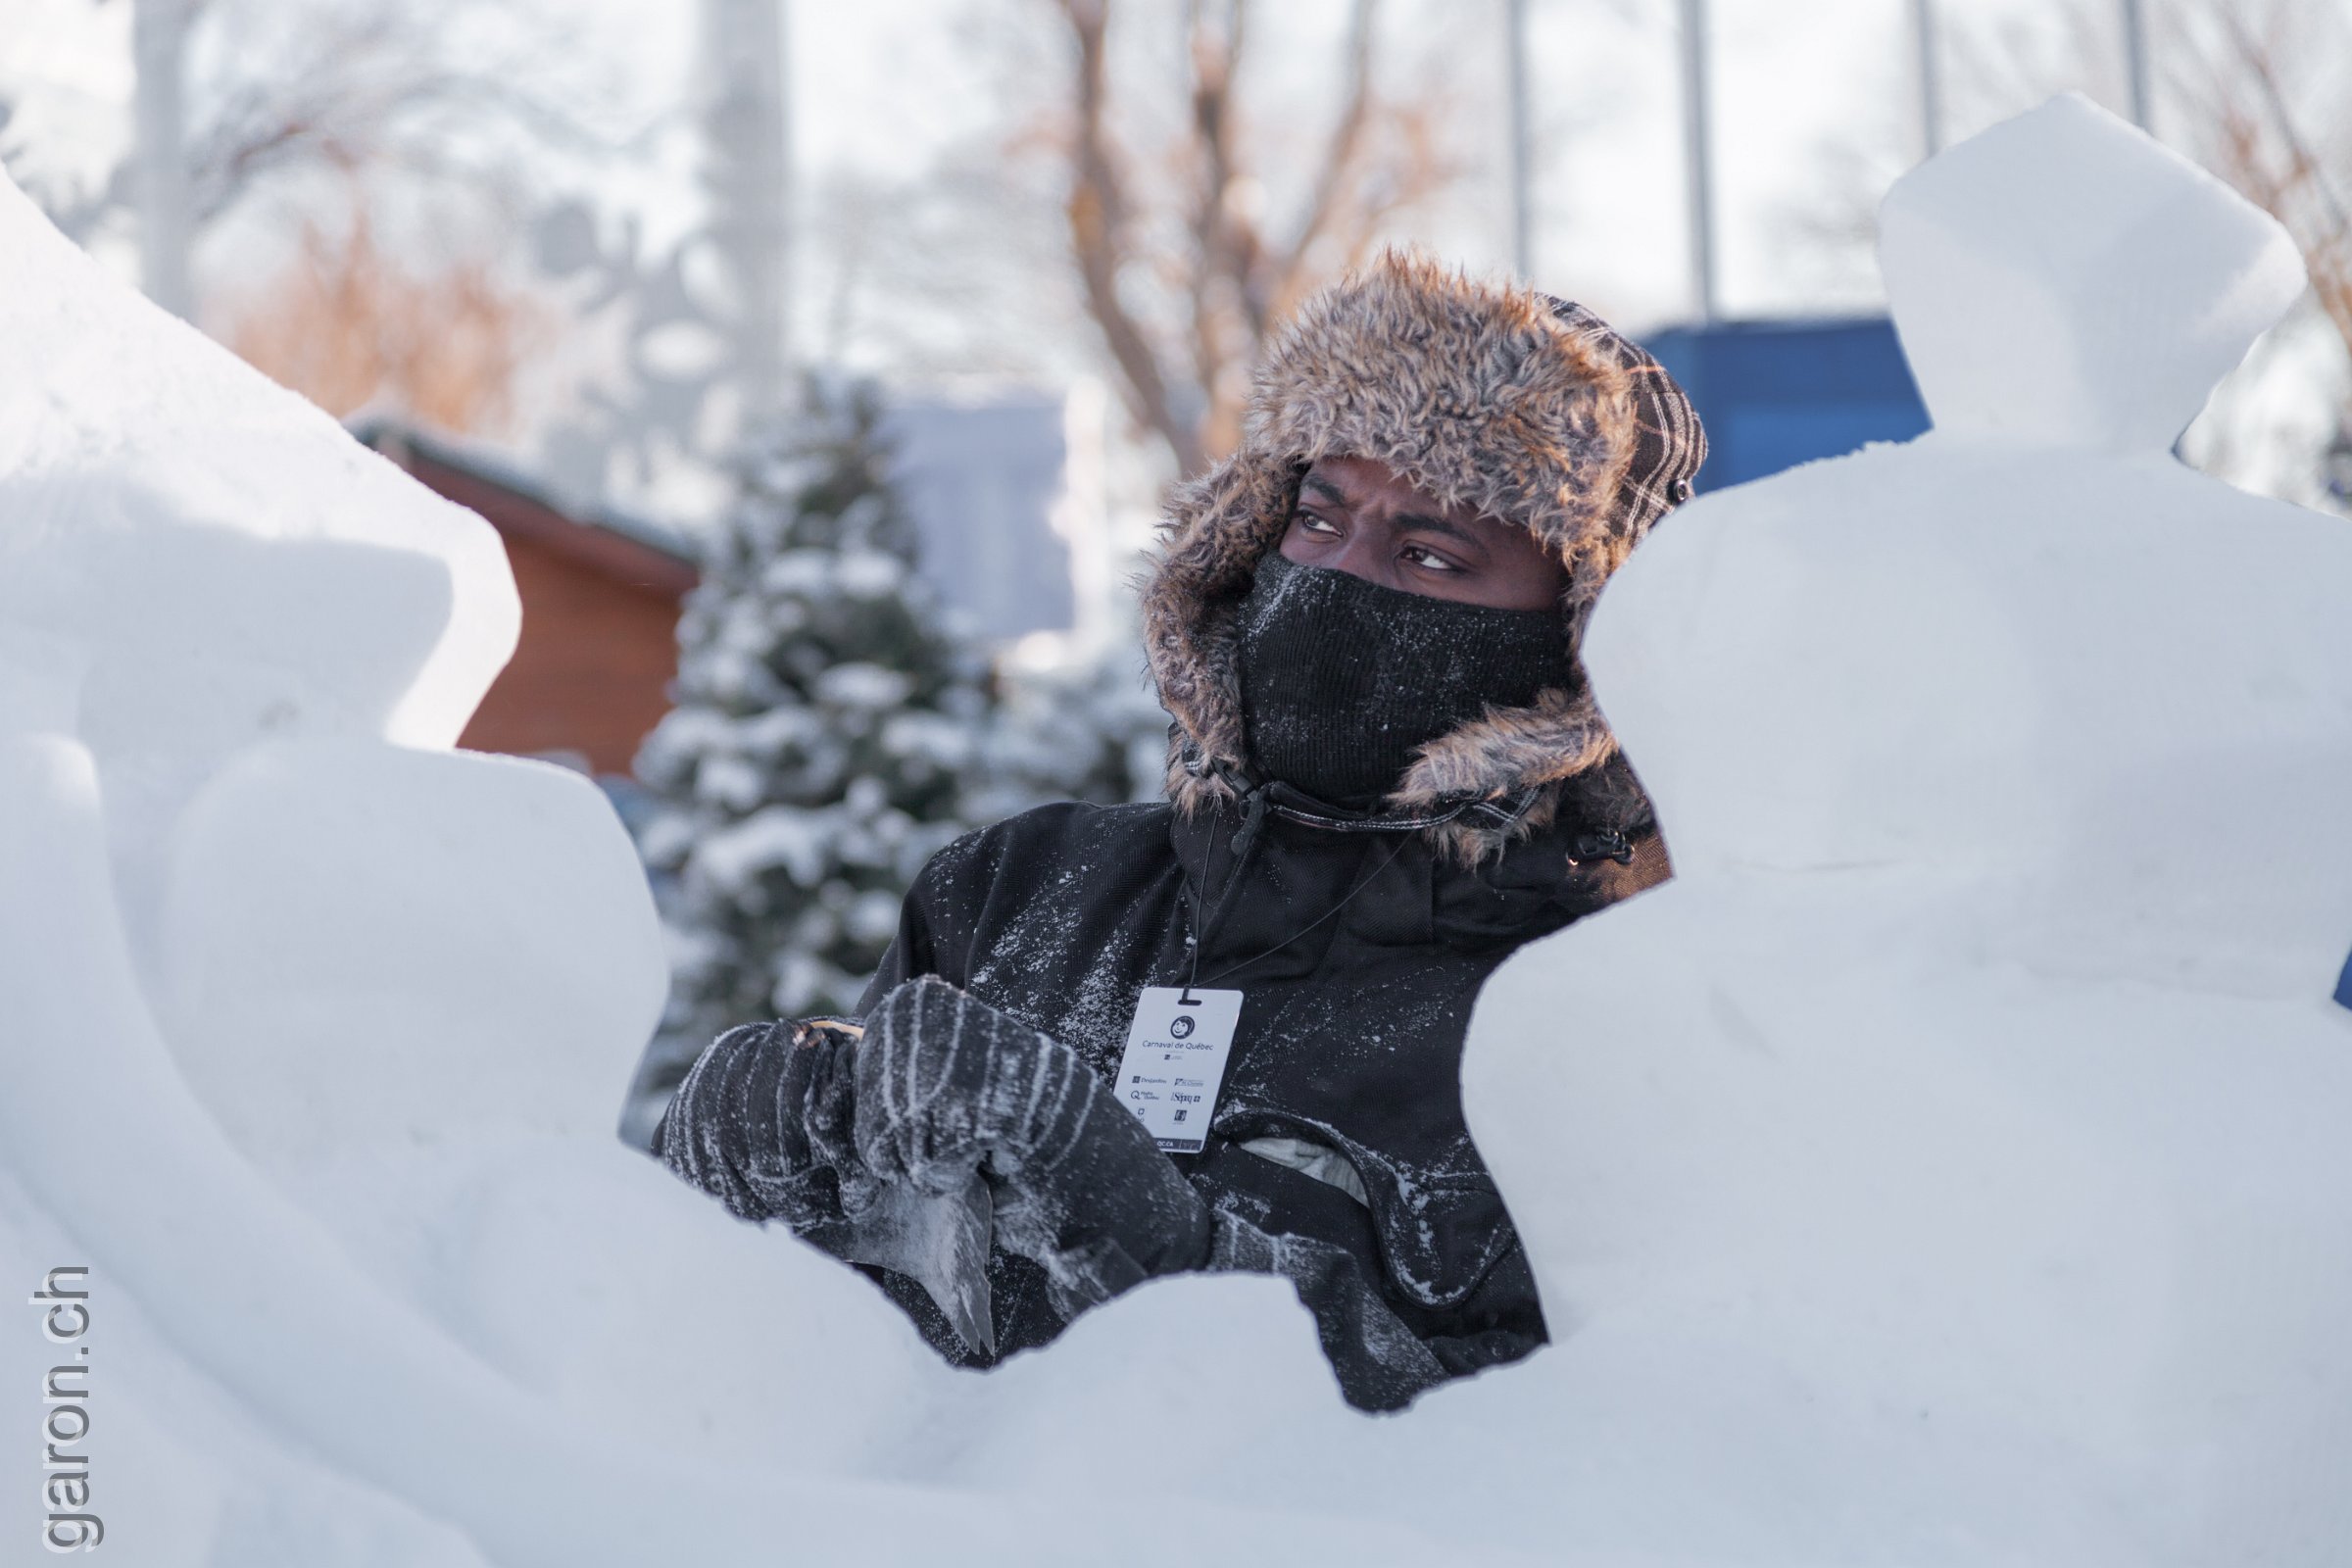 Québec City, Carnaval during the International Snow Sculpture Event 